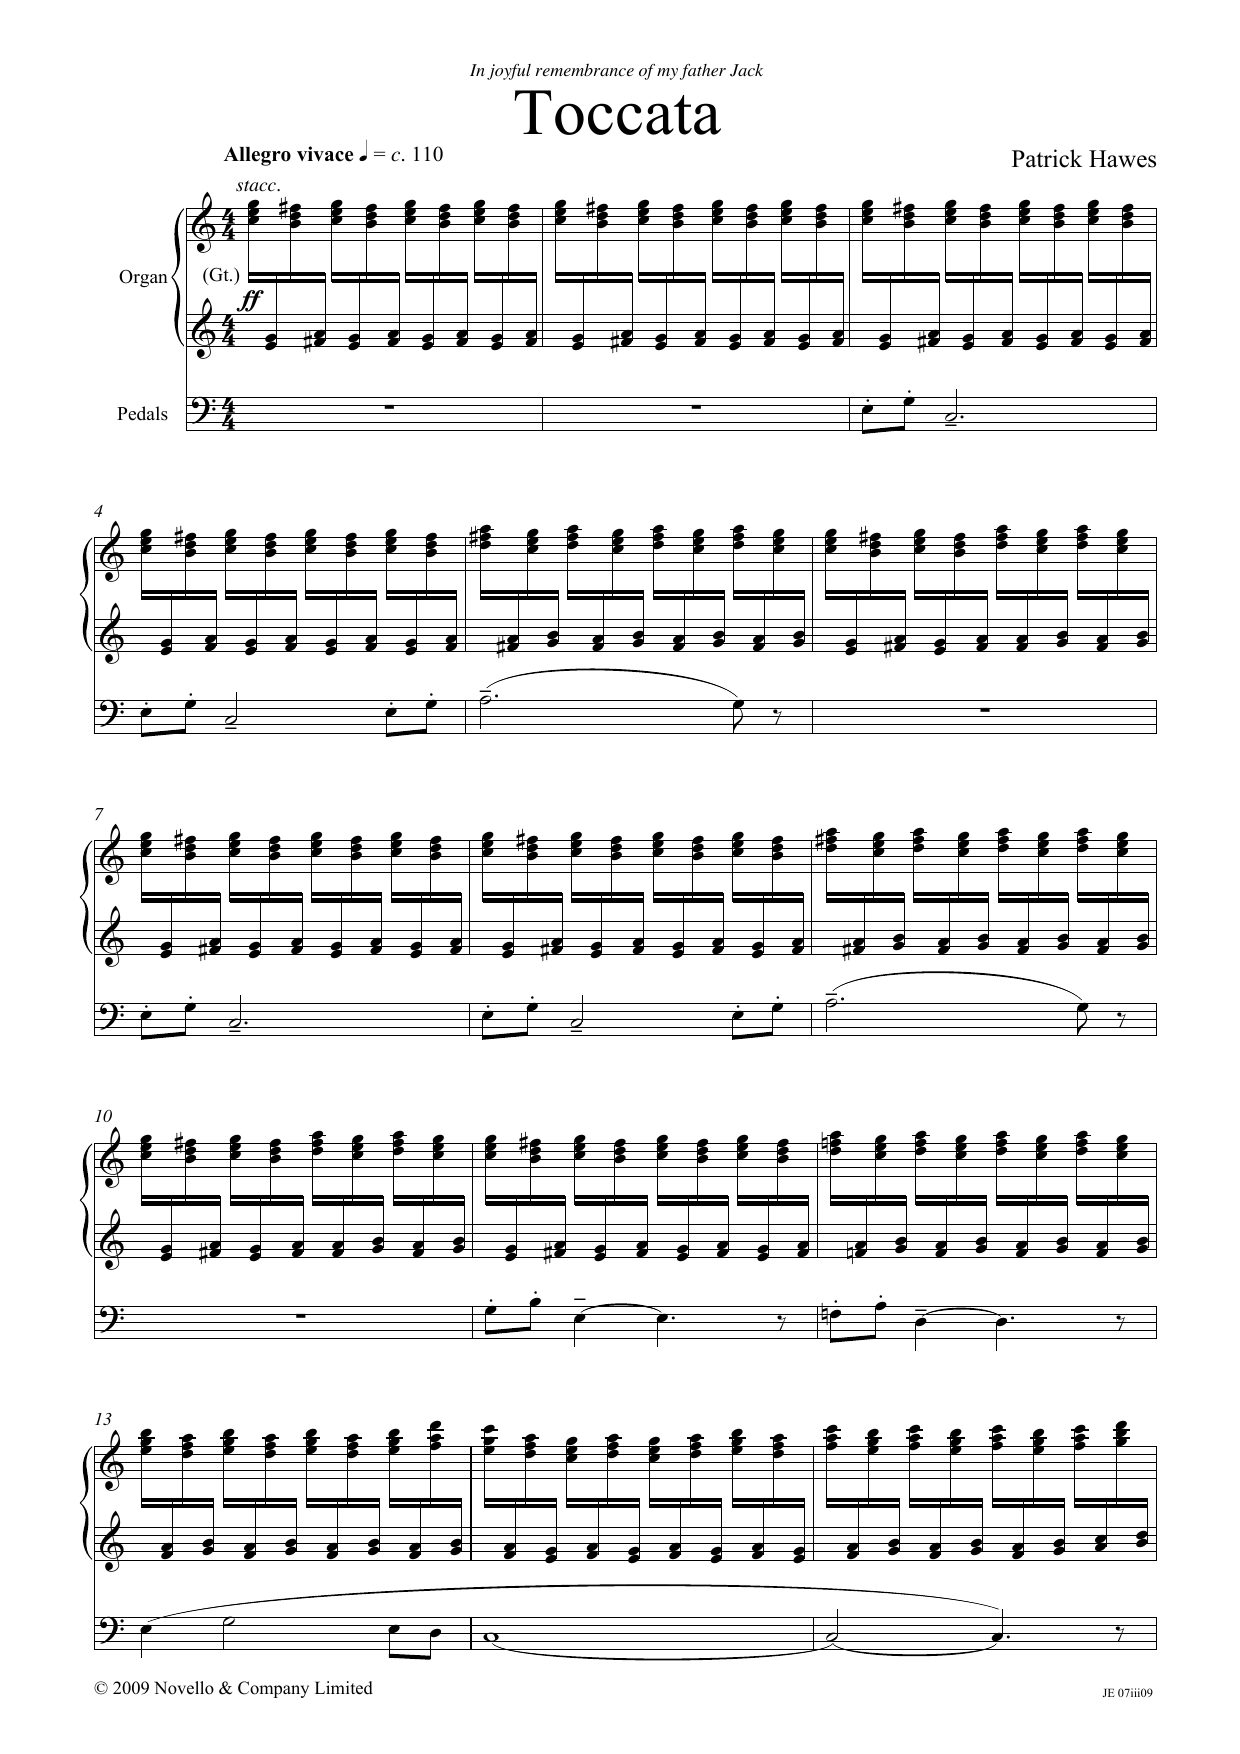 Patrick Hawes Toccata Sheet Music Notes & Chords for Organ - Download or Print PDF